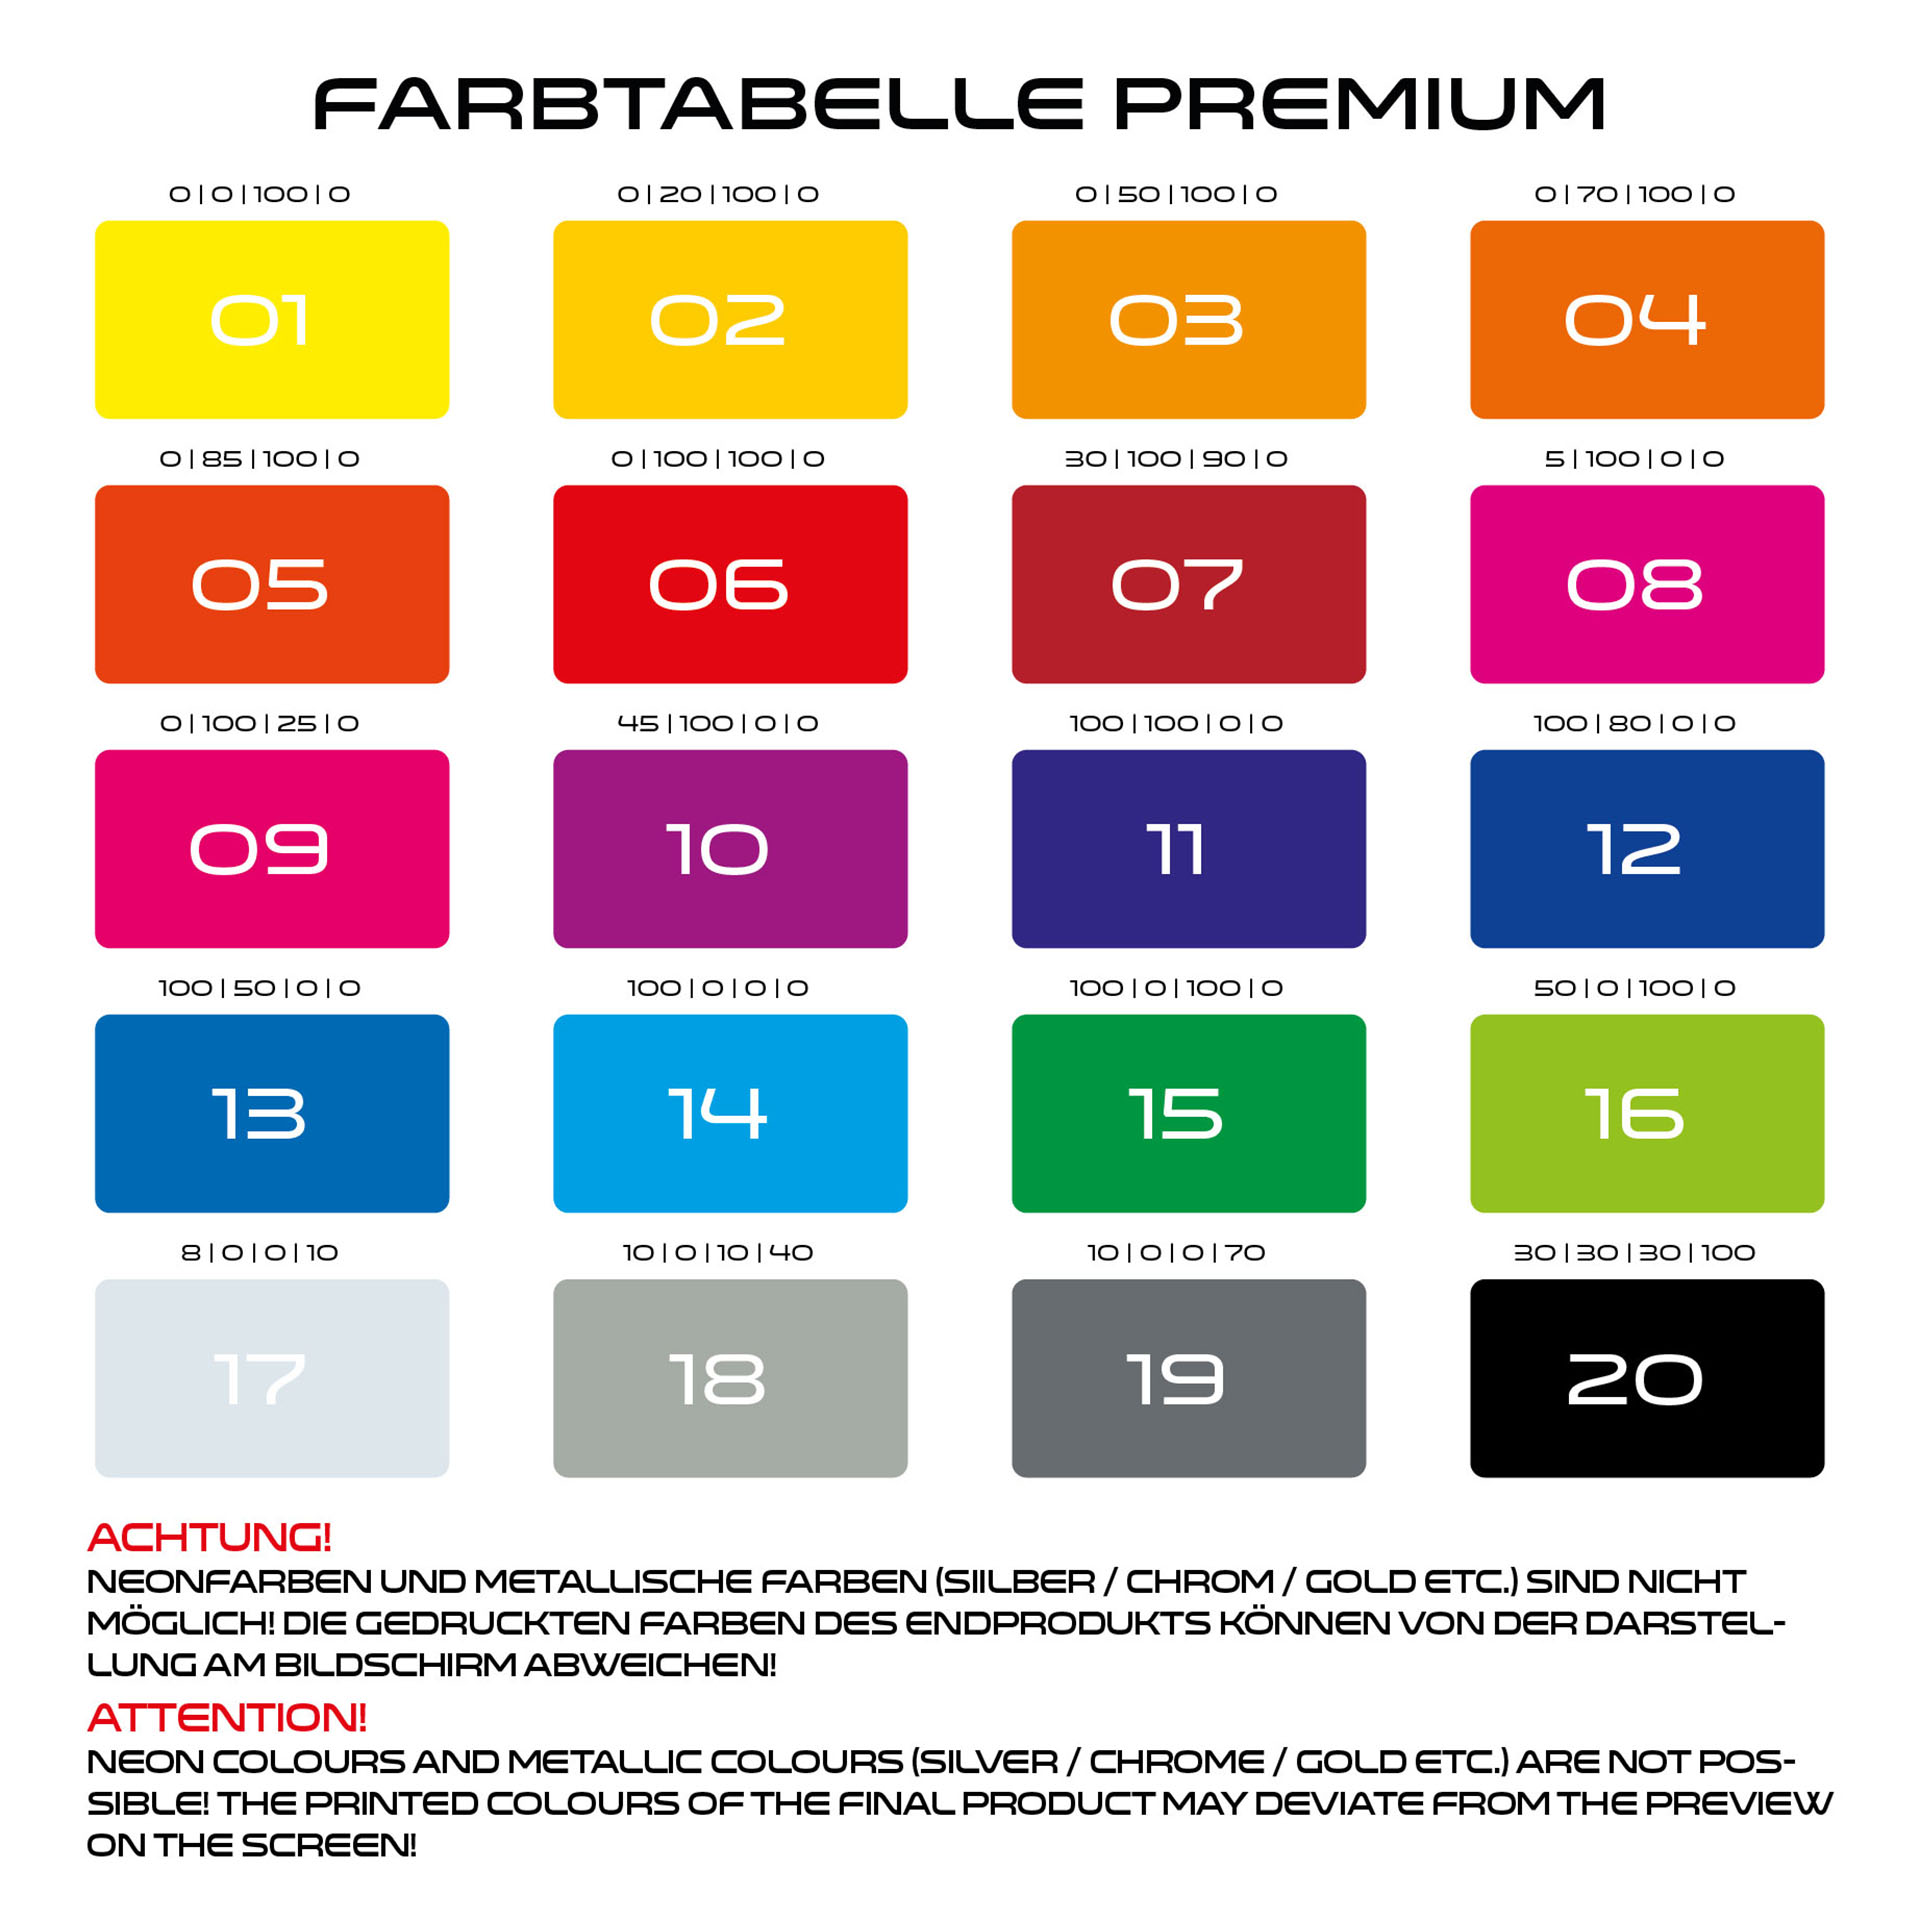 Zebramuster Felgenaufkleber Premium W Farbtabelle Premium Wheelsticker